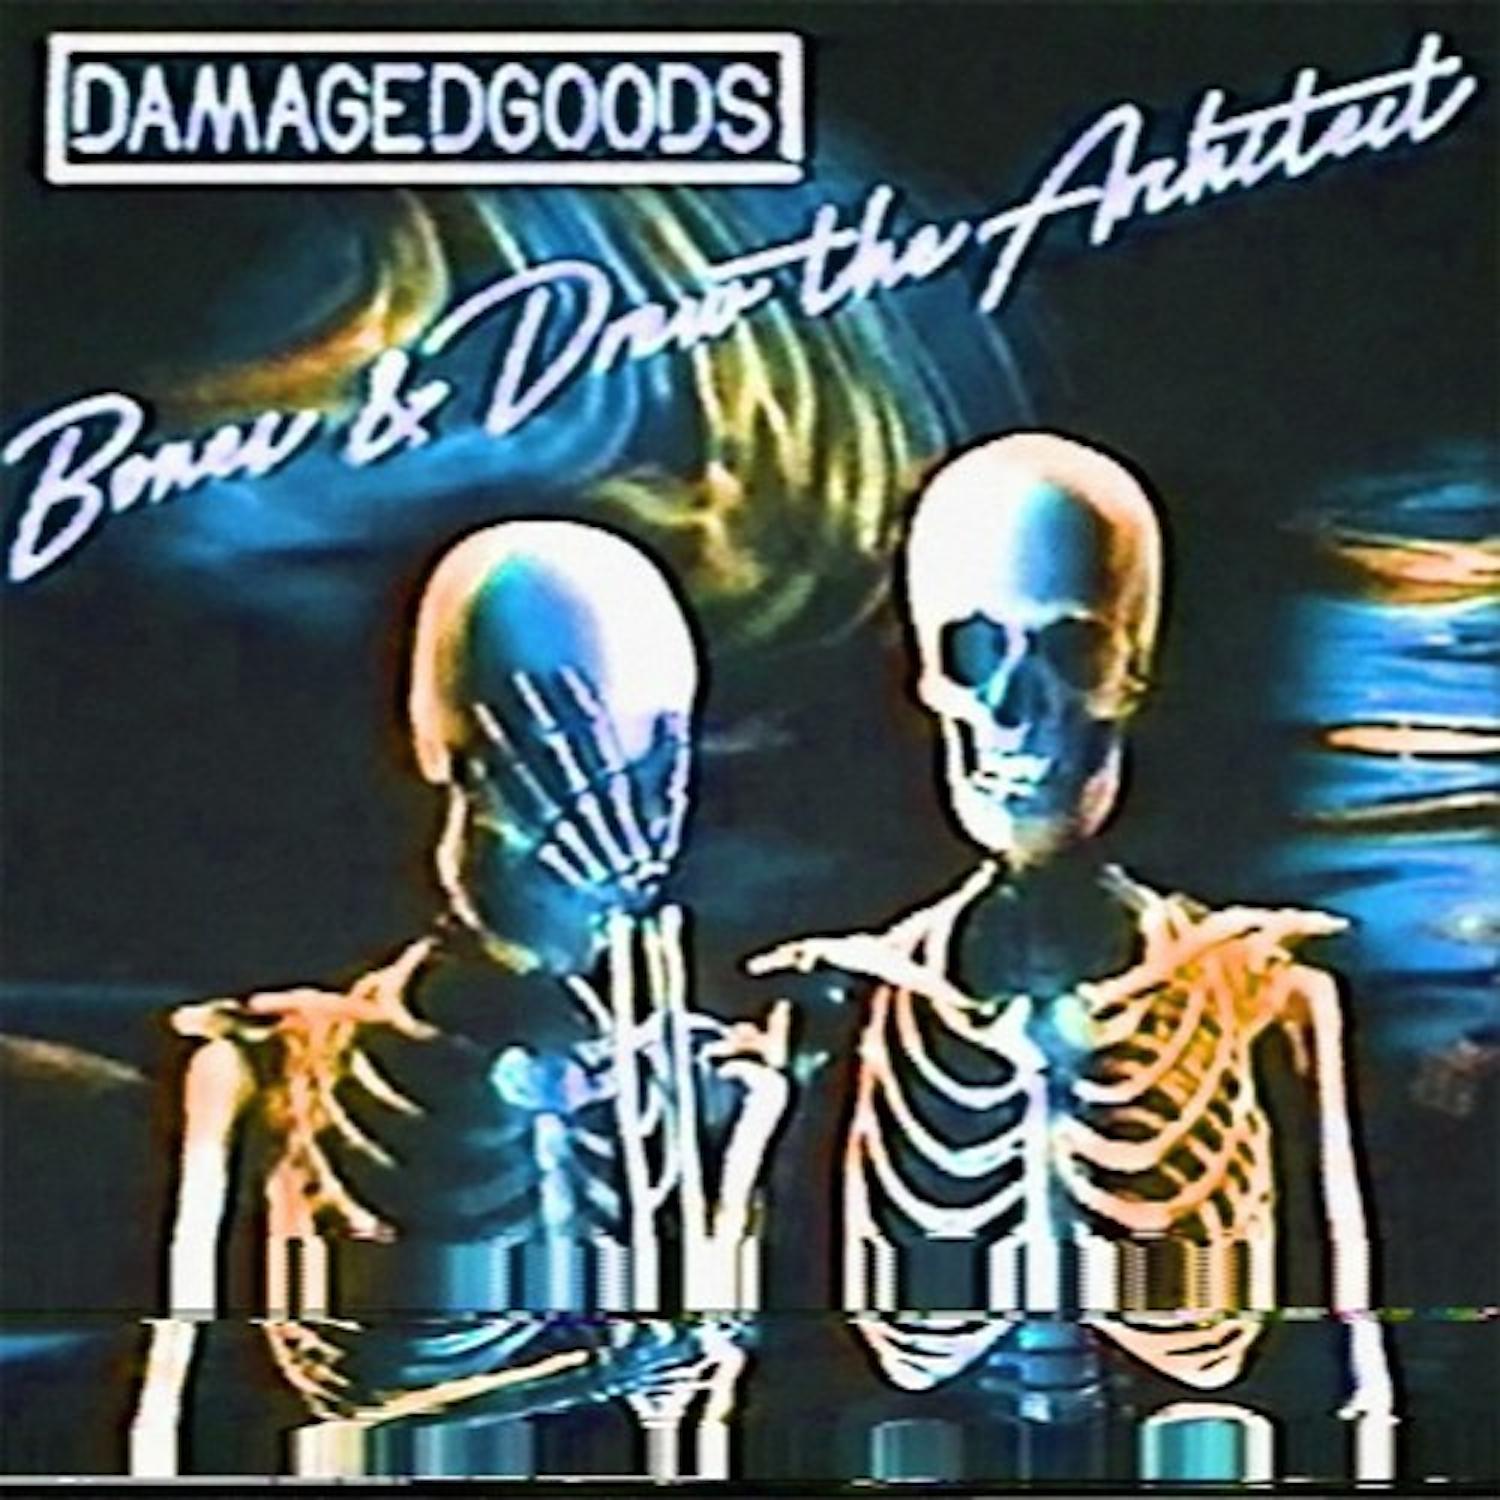 Hayit murat timberlake bones. Bones (рэпер). Damaged goods Bones. Bones обложки альбомов. Bones Drew the Architect Damaged goods.